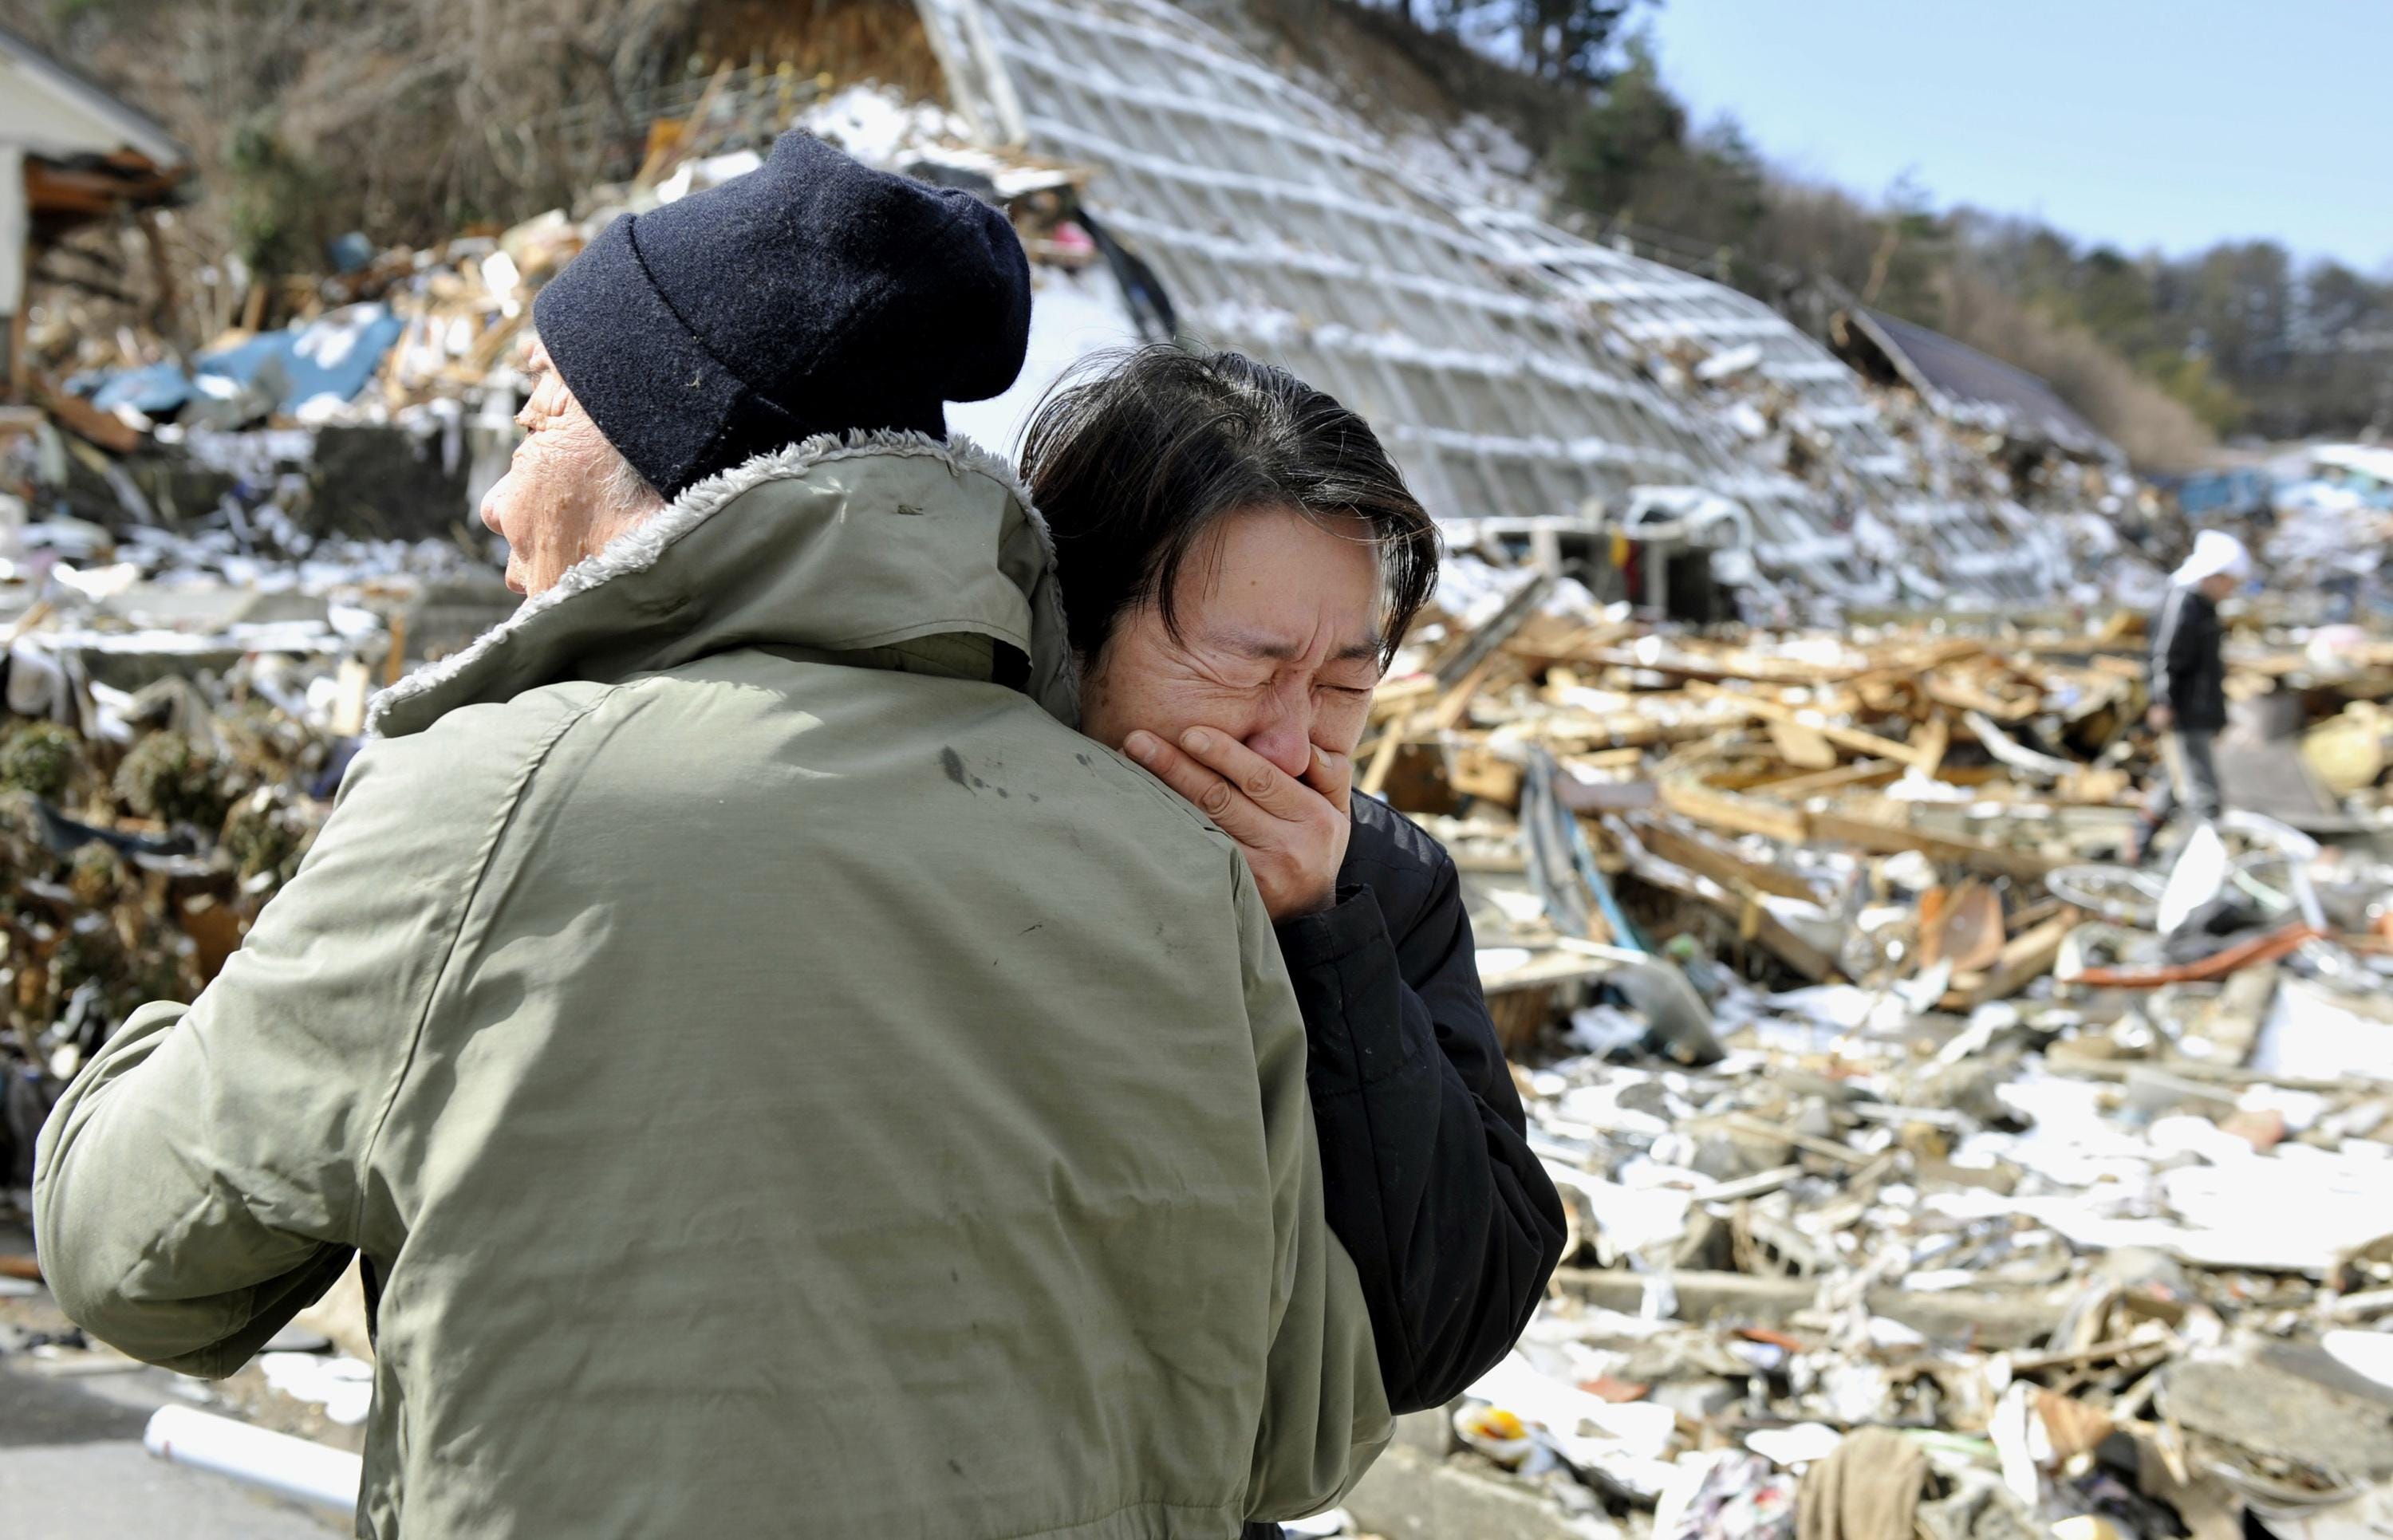 Другое землетрясения. Землетрясение и ЦУНАМИ В Японии в 2011 году. Землетрясение в Японии 2011 года.